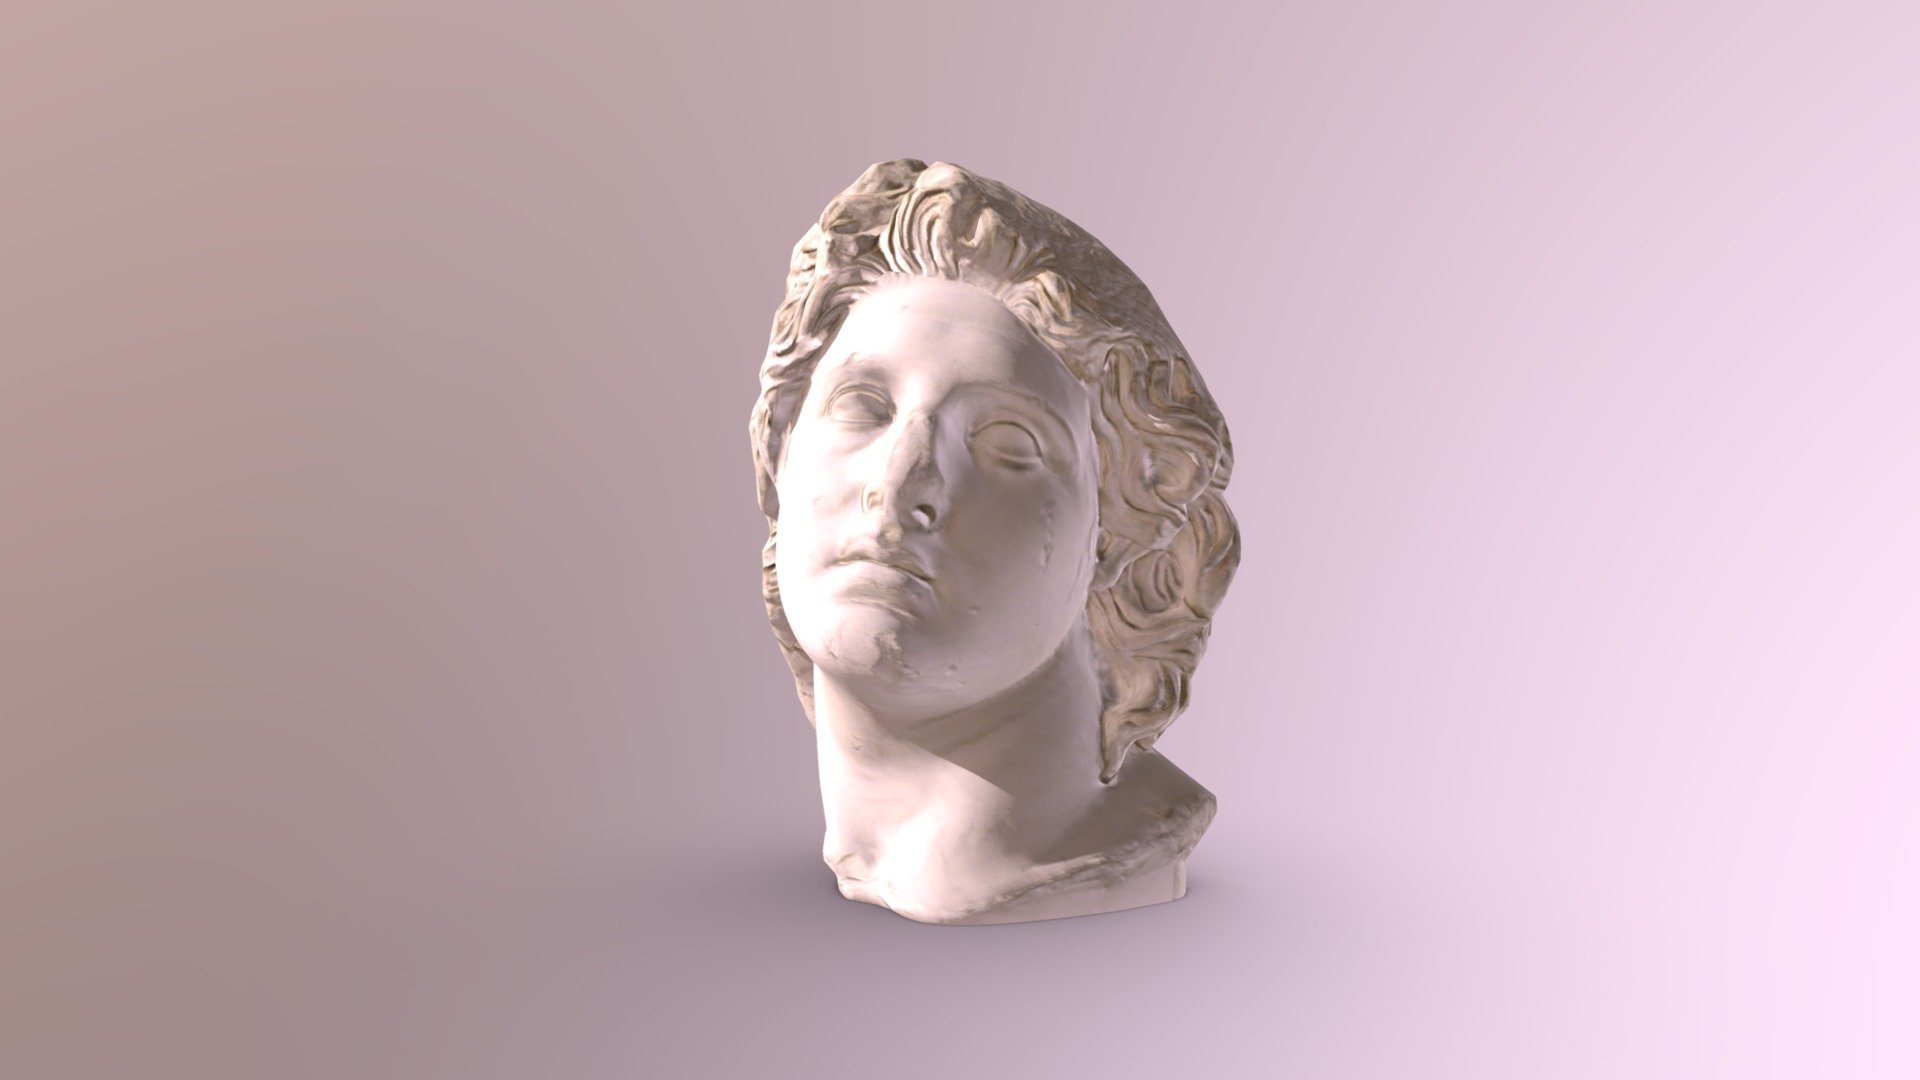 greek god helios bust replica